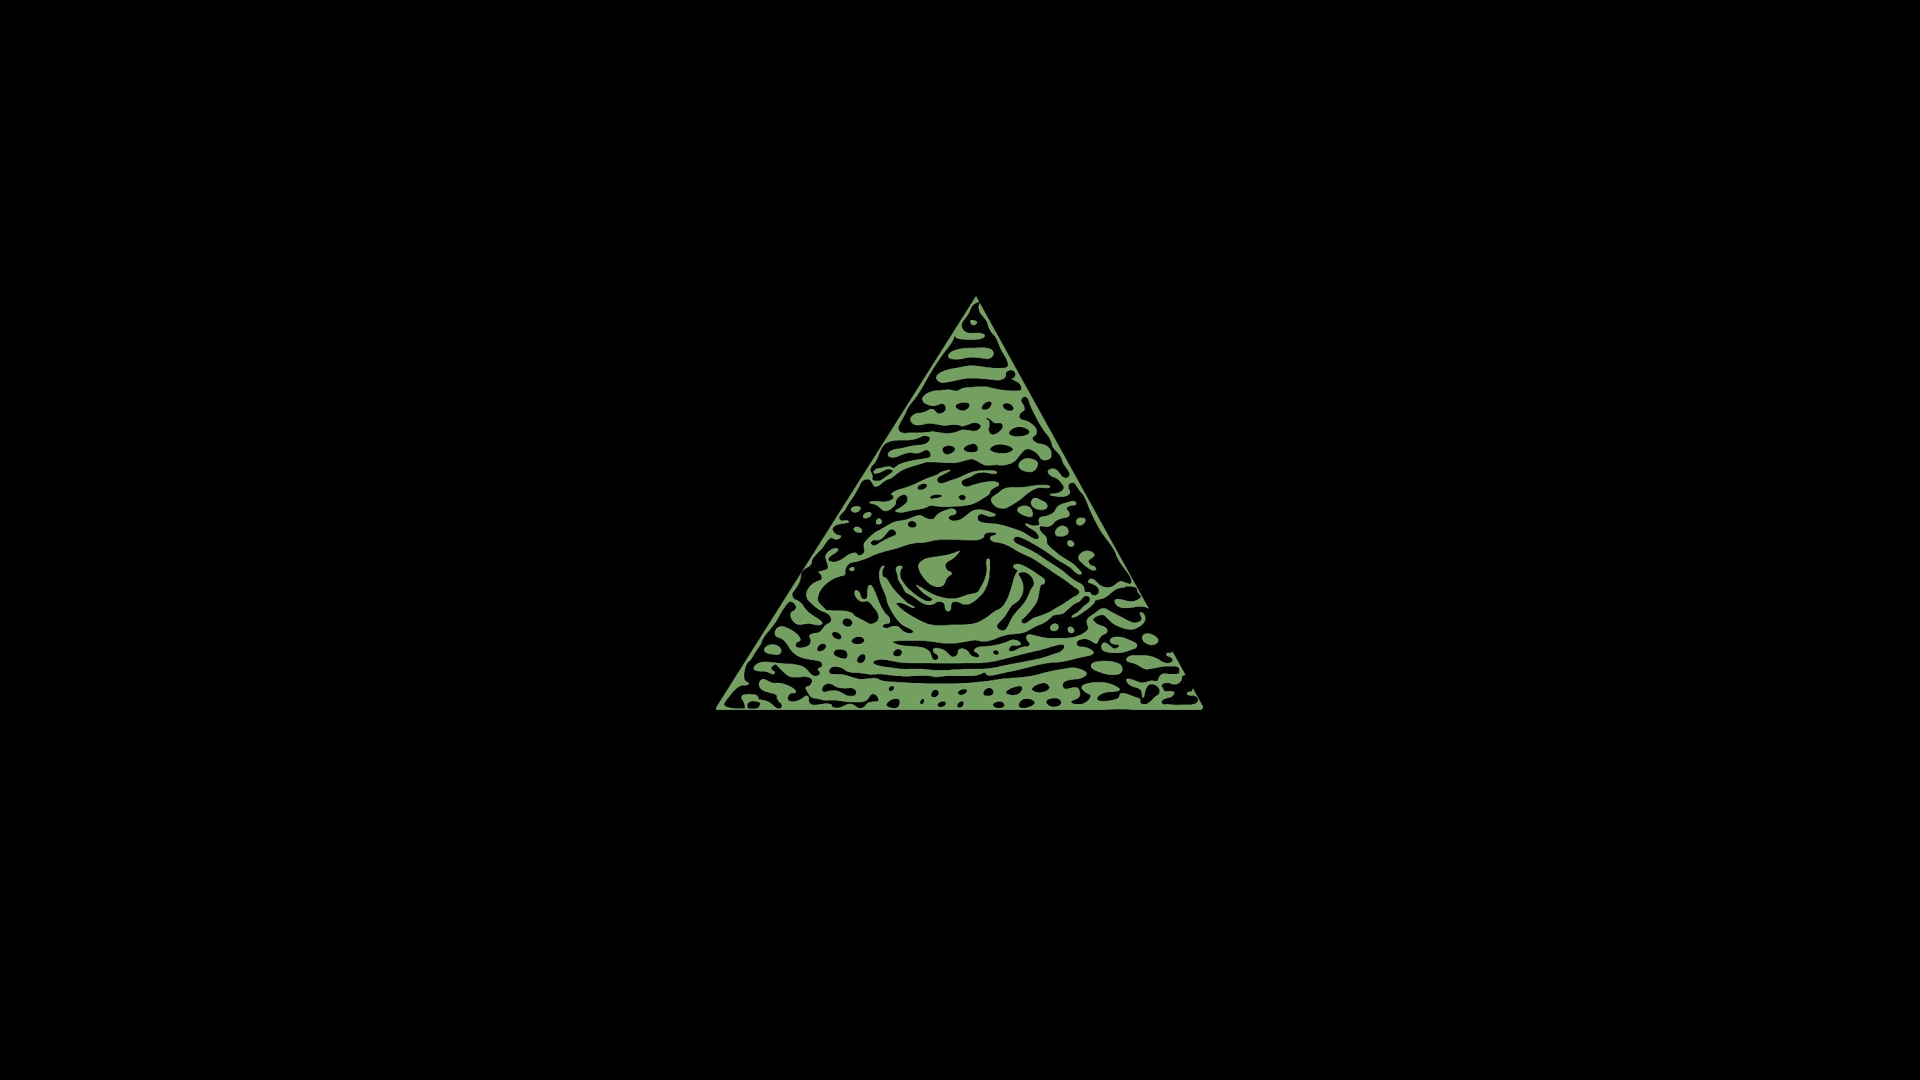 Illuminati Symbol Wallpaper Image